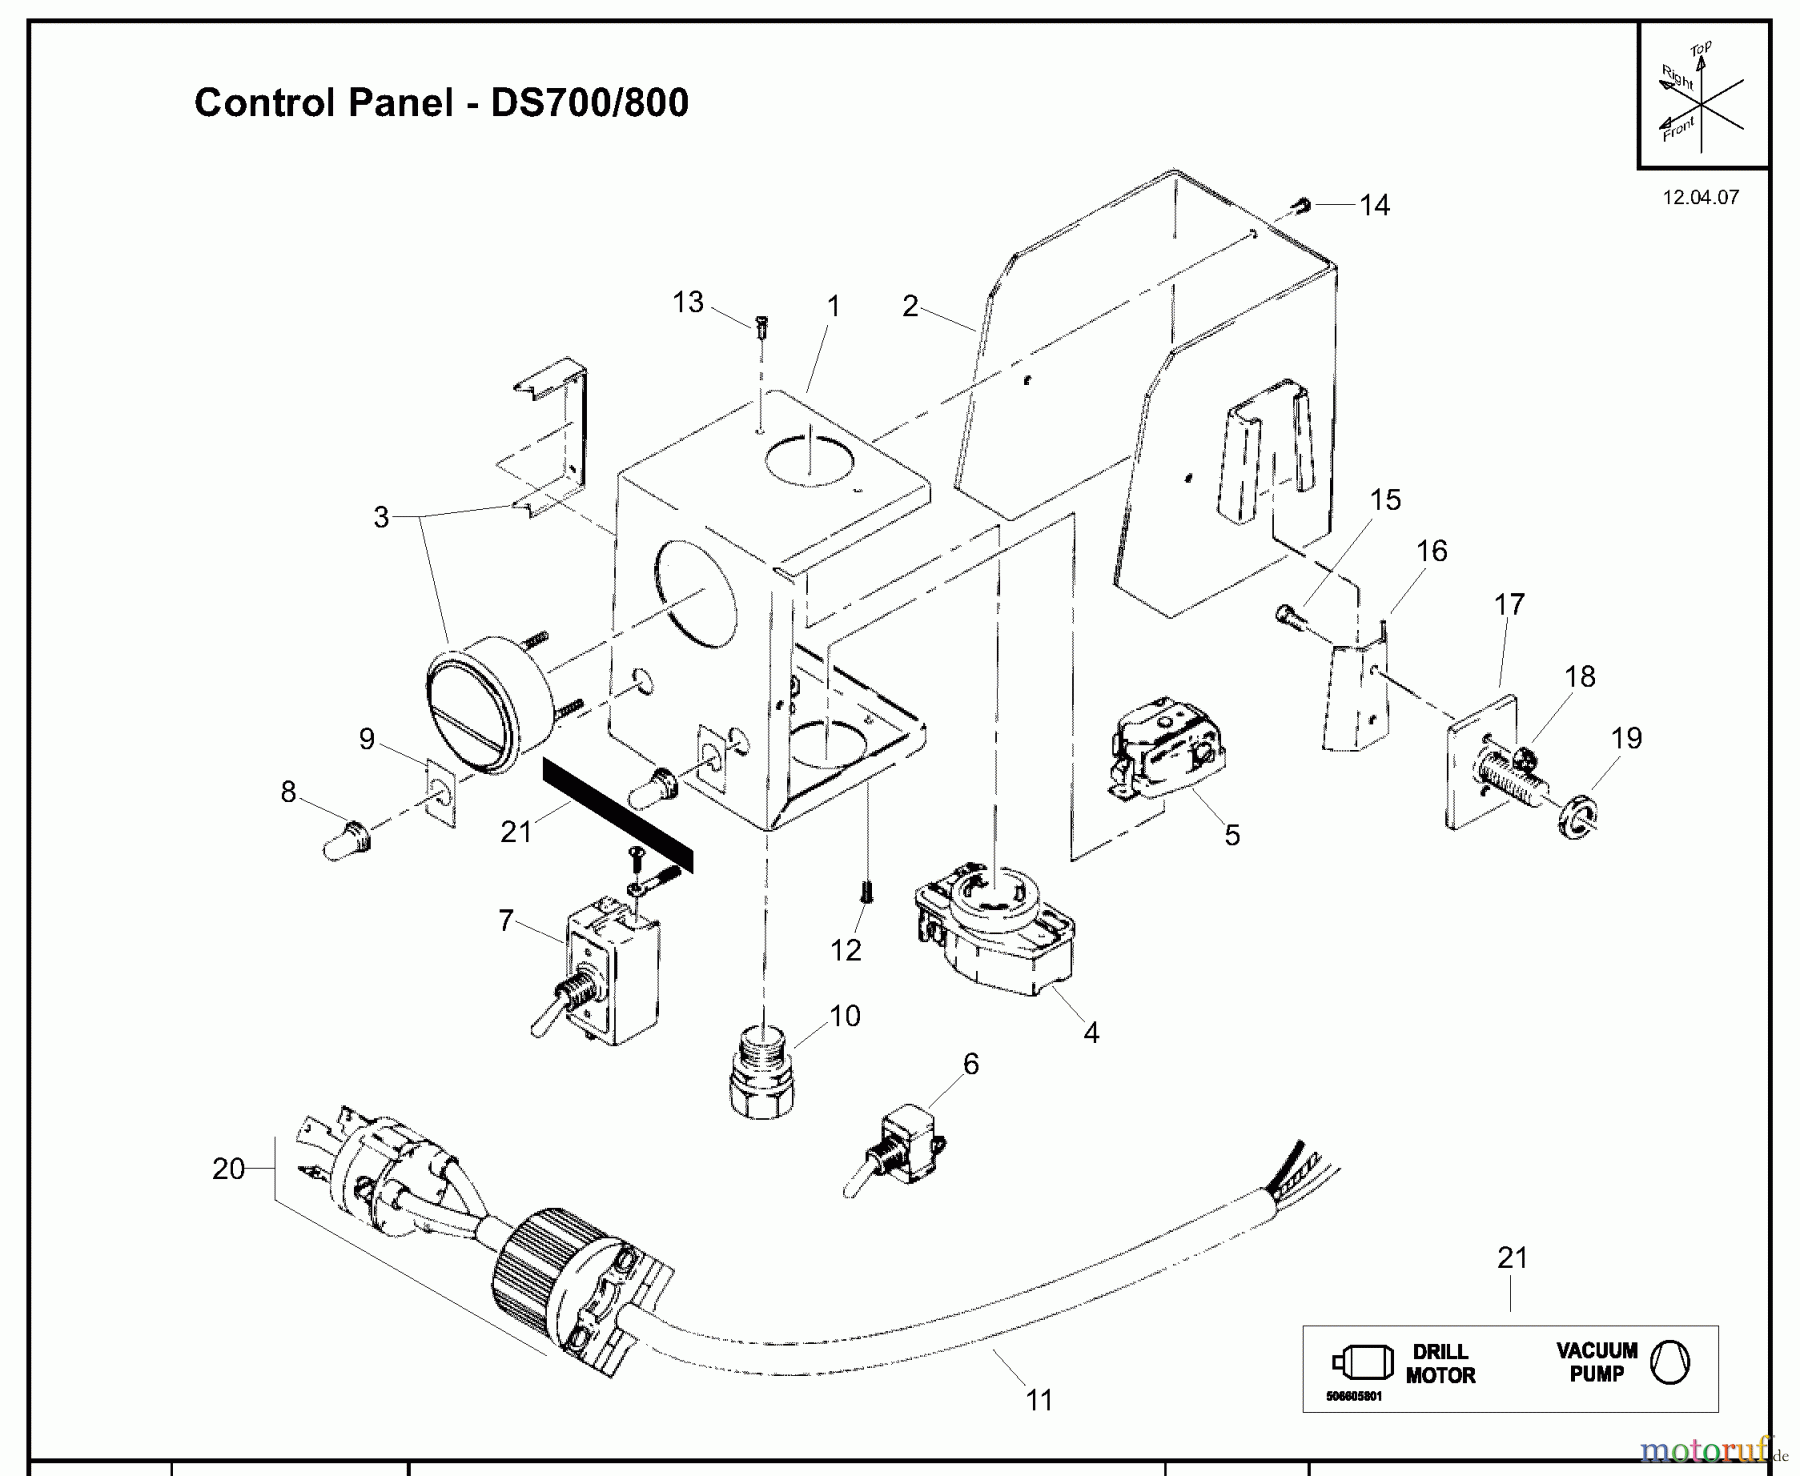  Husqvarna Zubehör DS800 (504625401) - Husqvarna Drill Stand (2007-12 & After) Control Panel